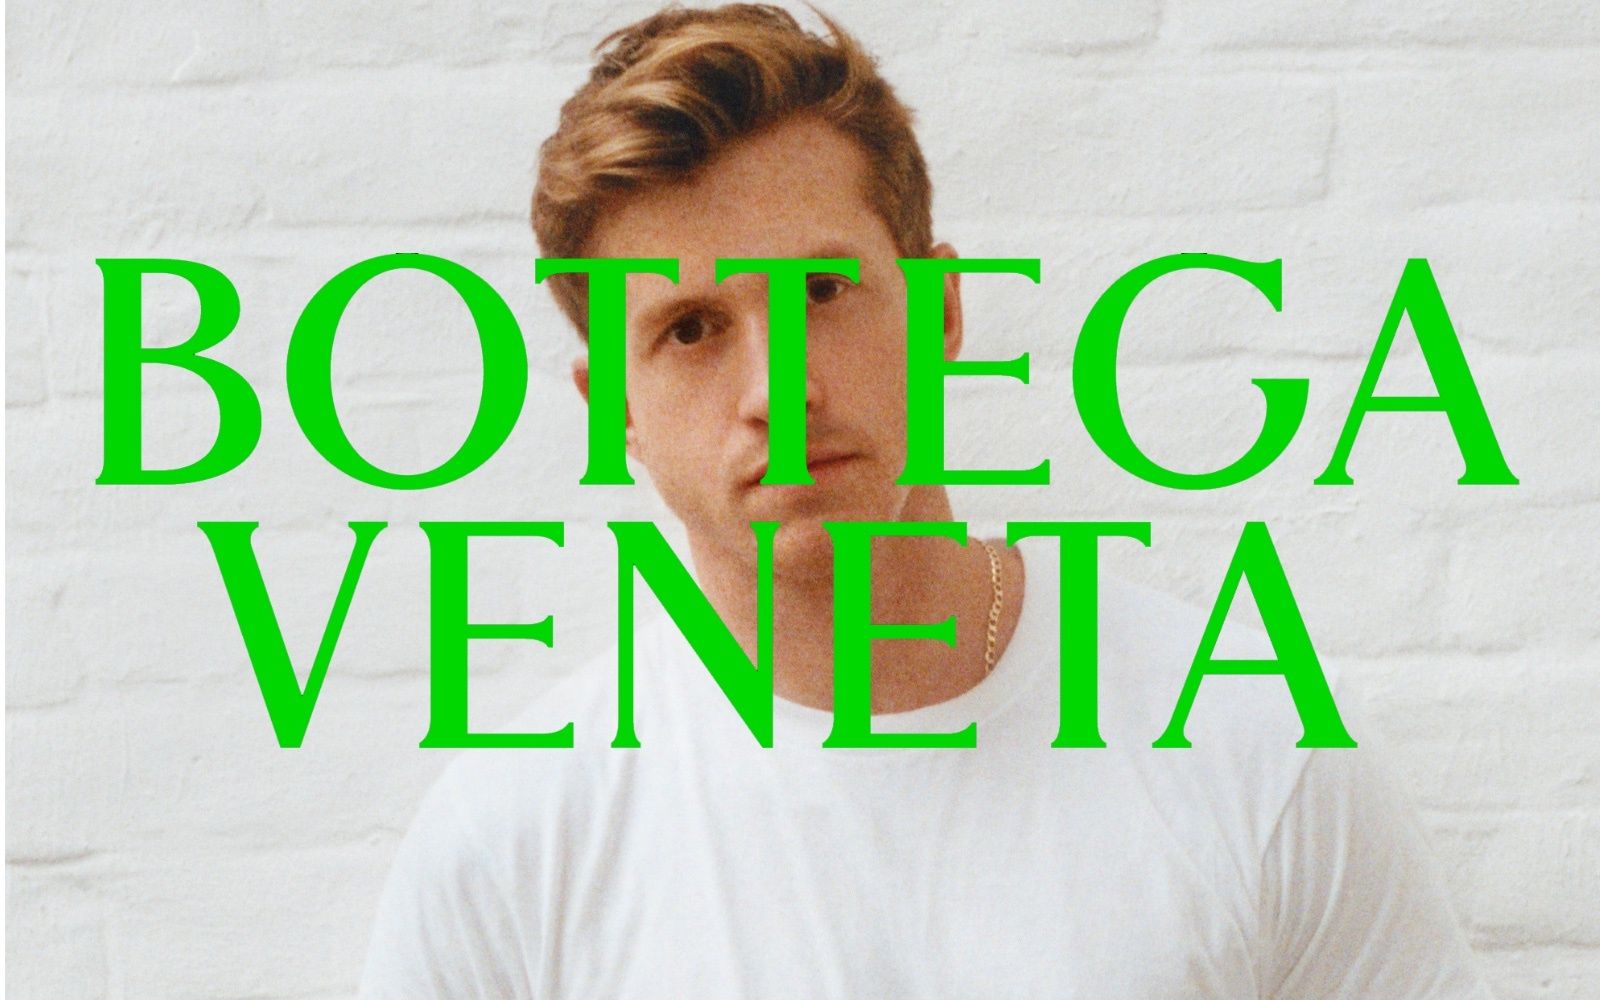 Daniel Lee to leave Bottega Veneta